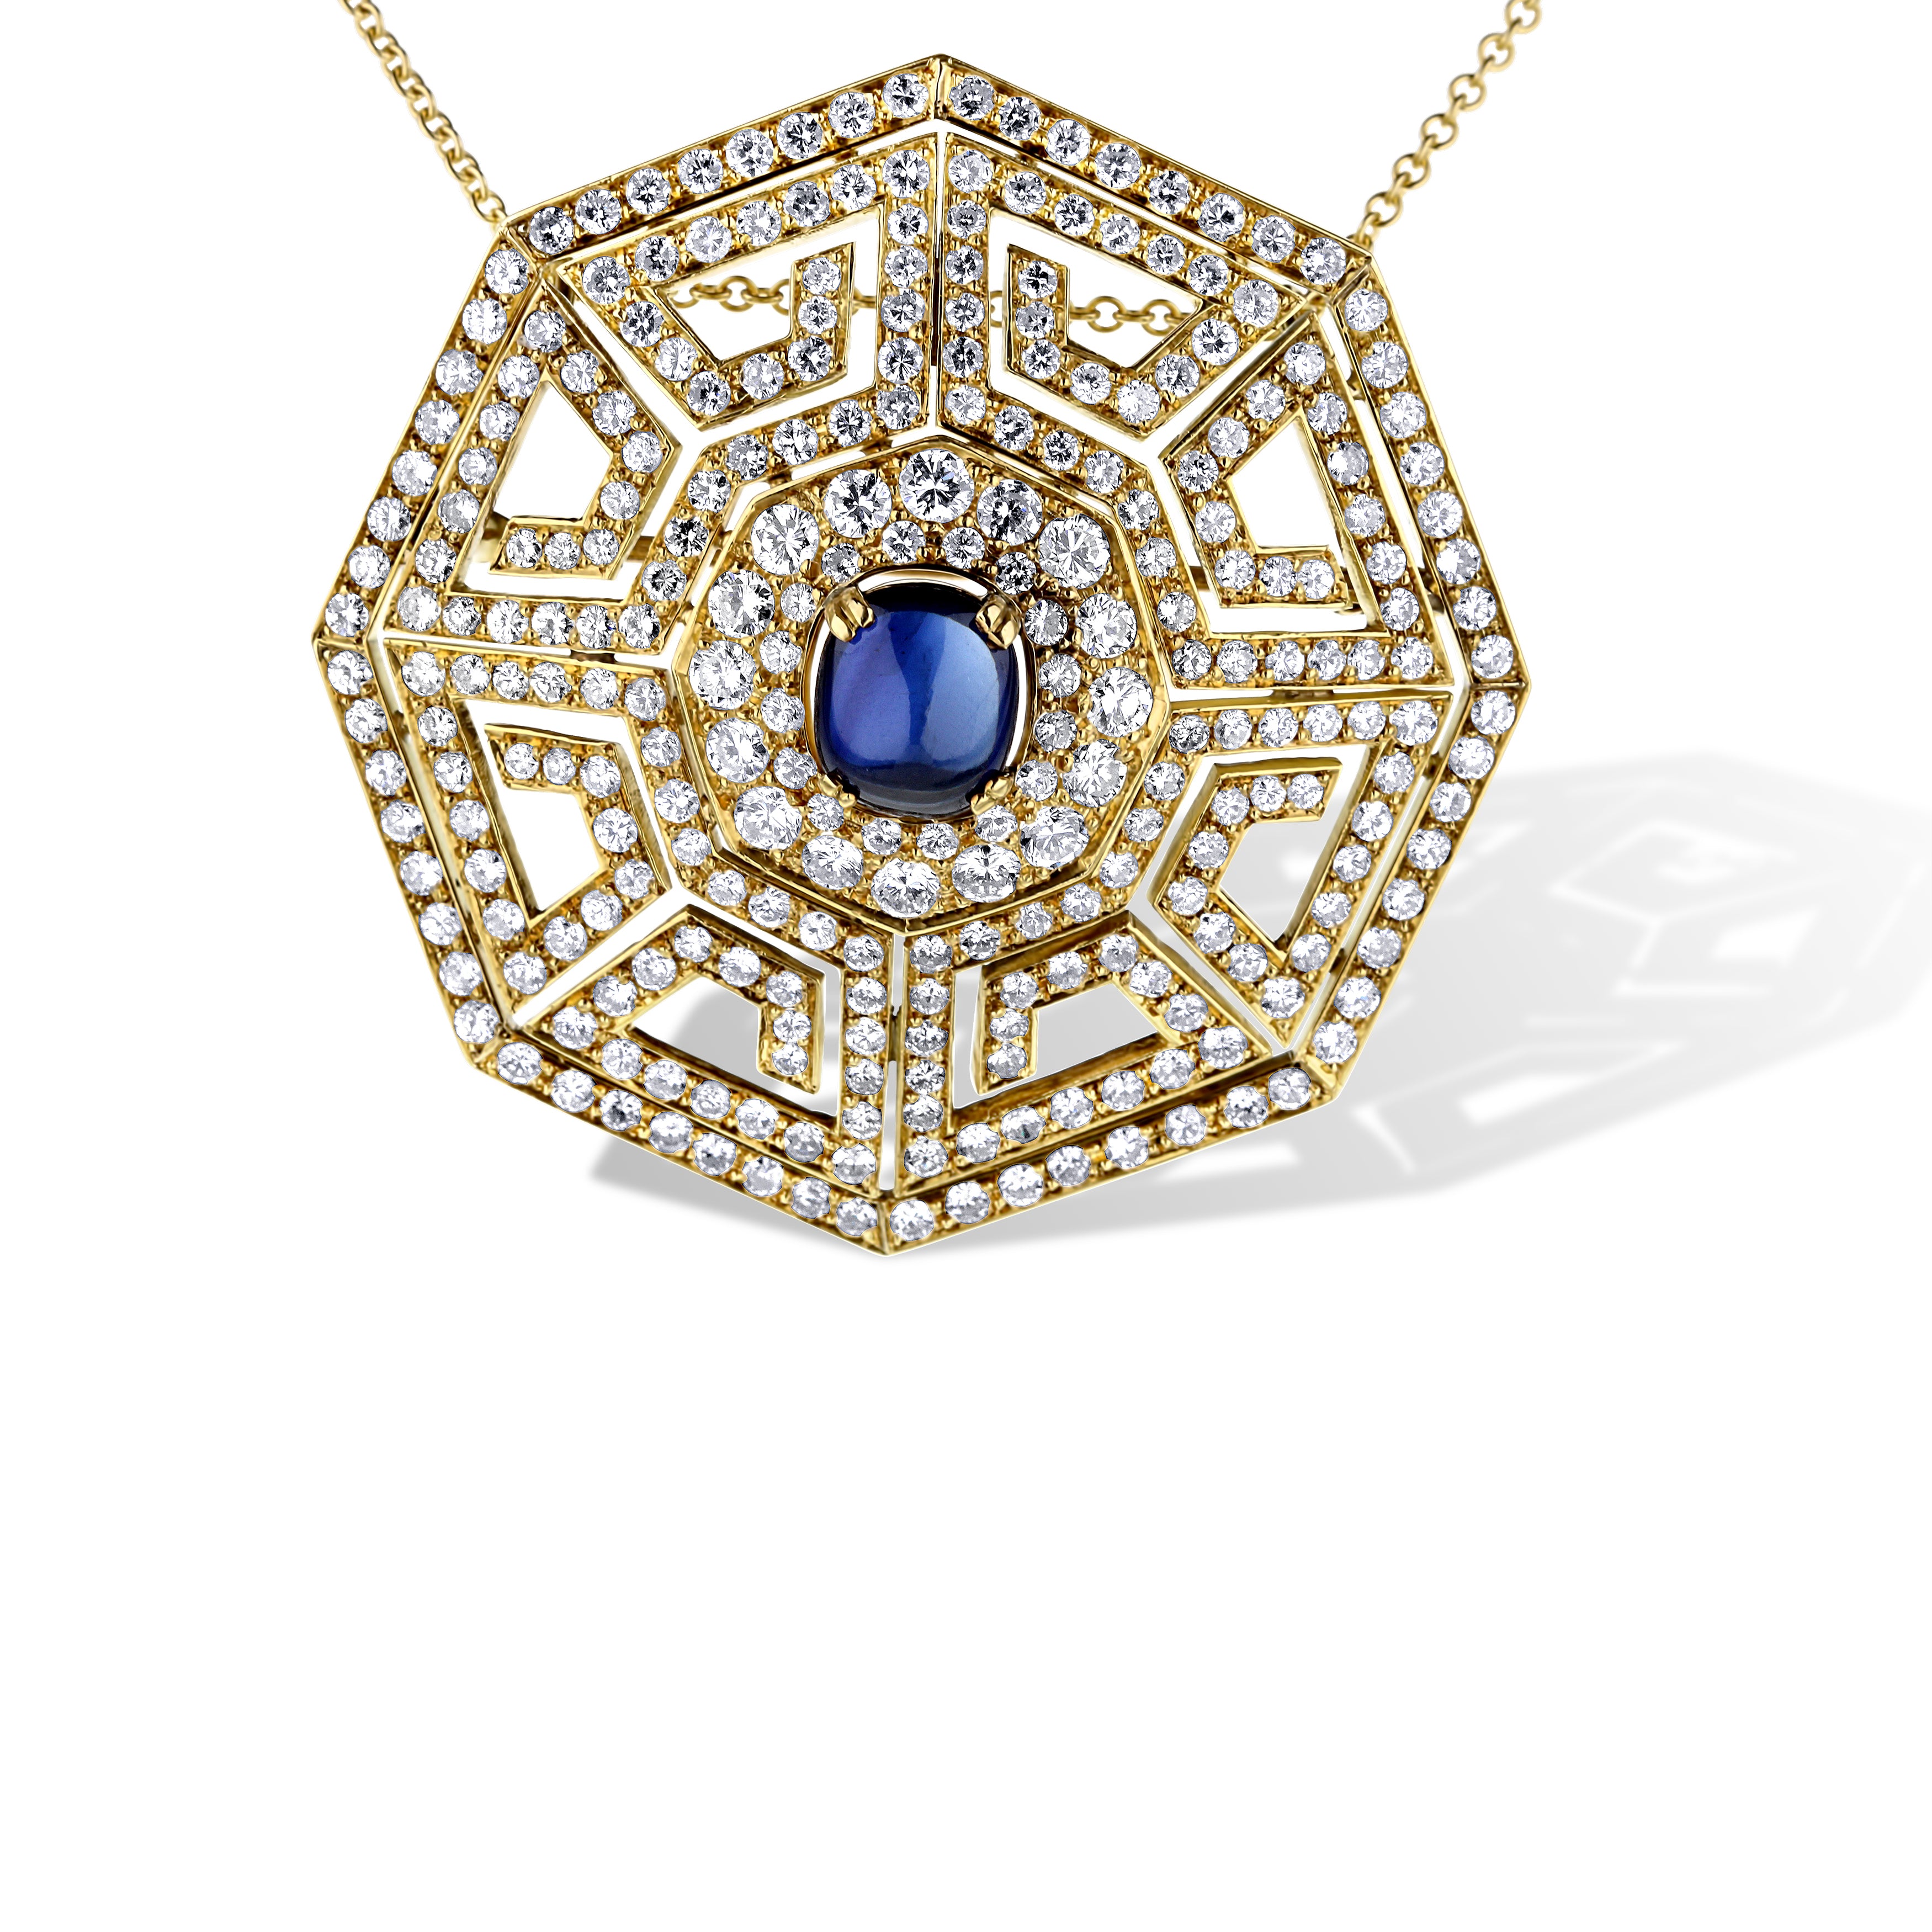 18K Yellow Gold Art Deco Design Diamond Pendant Necklace With A Blue Sapphire Cabochon